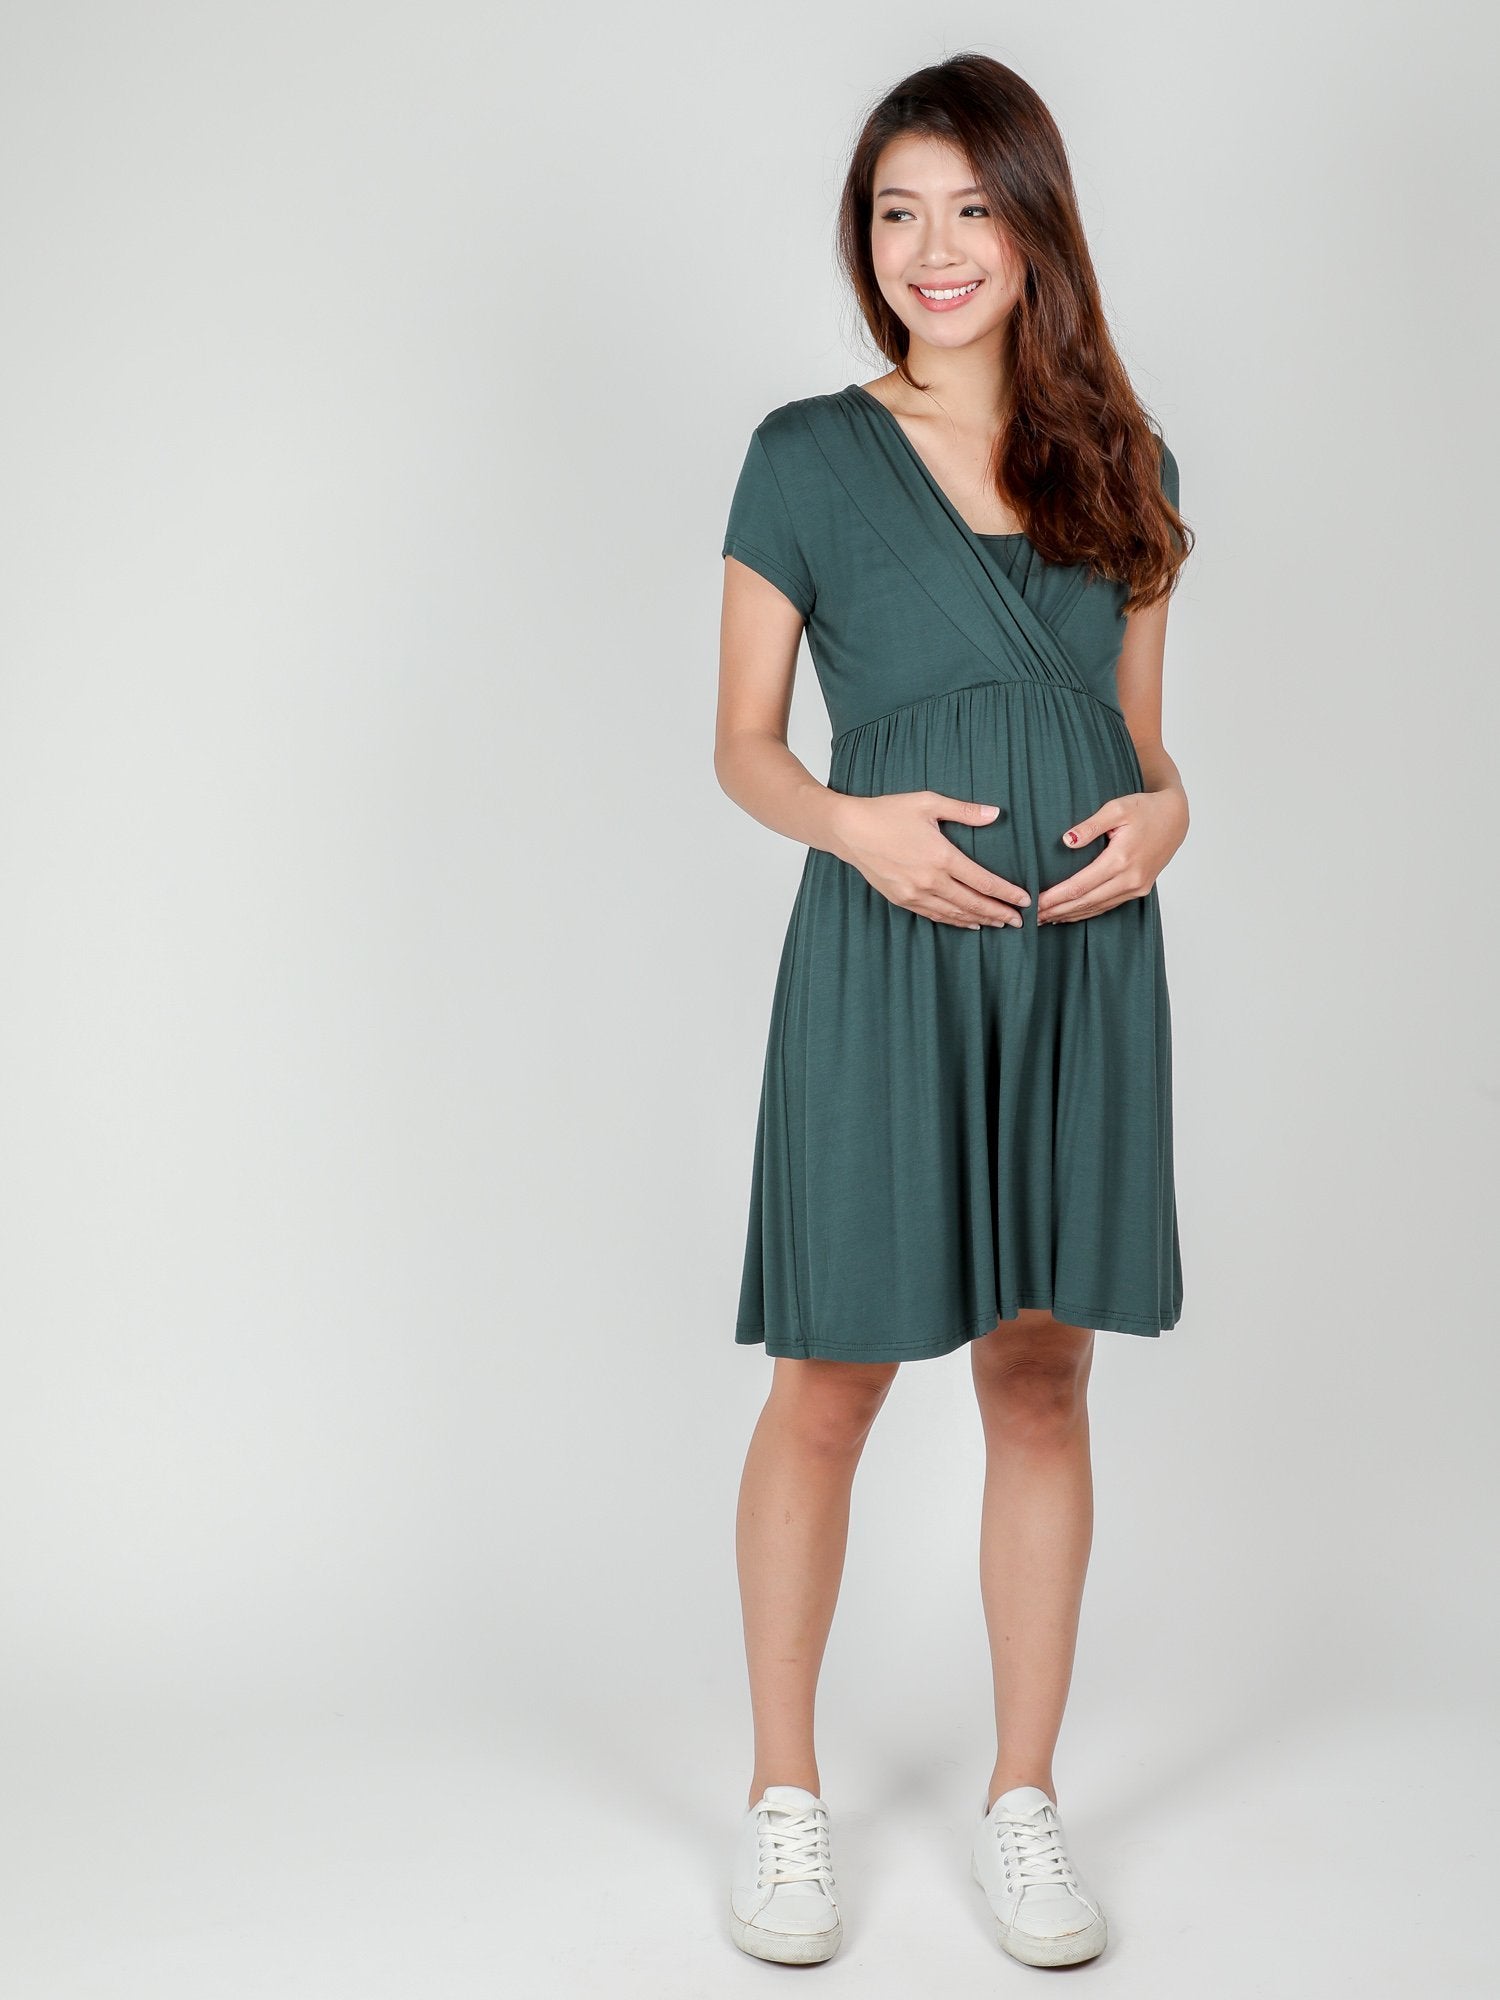 Bellefinery Emerald Ribbon Maternity Dress